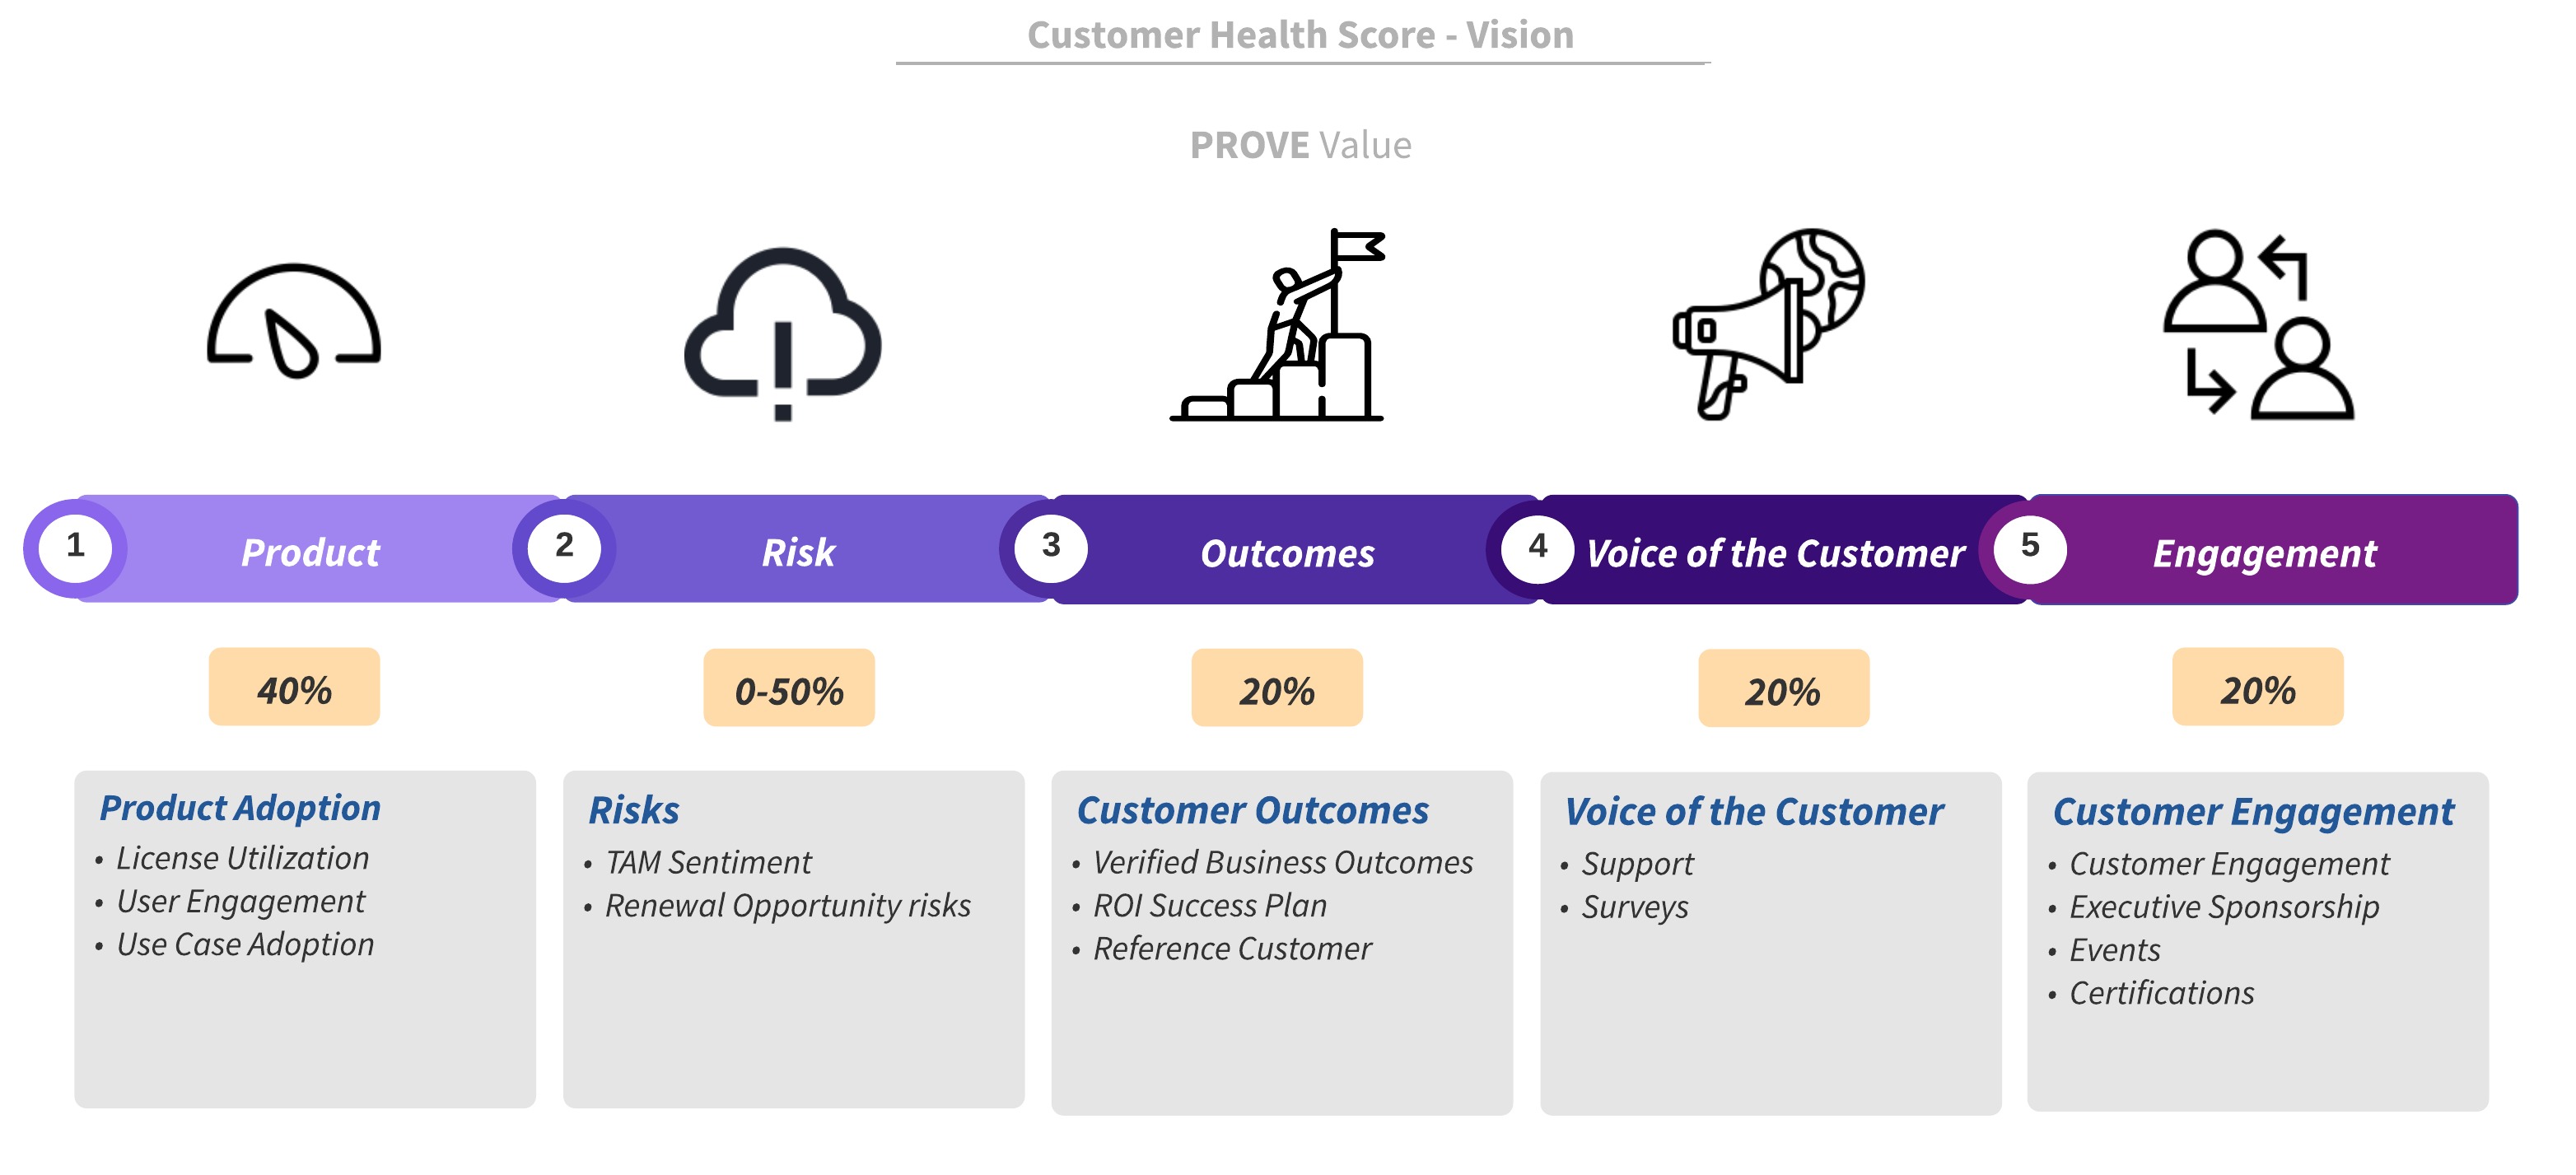 Customer Health Vision